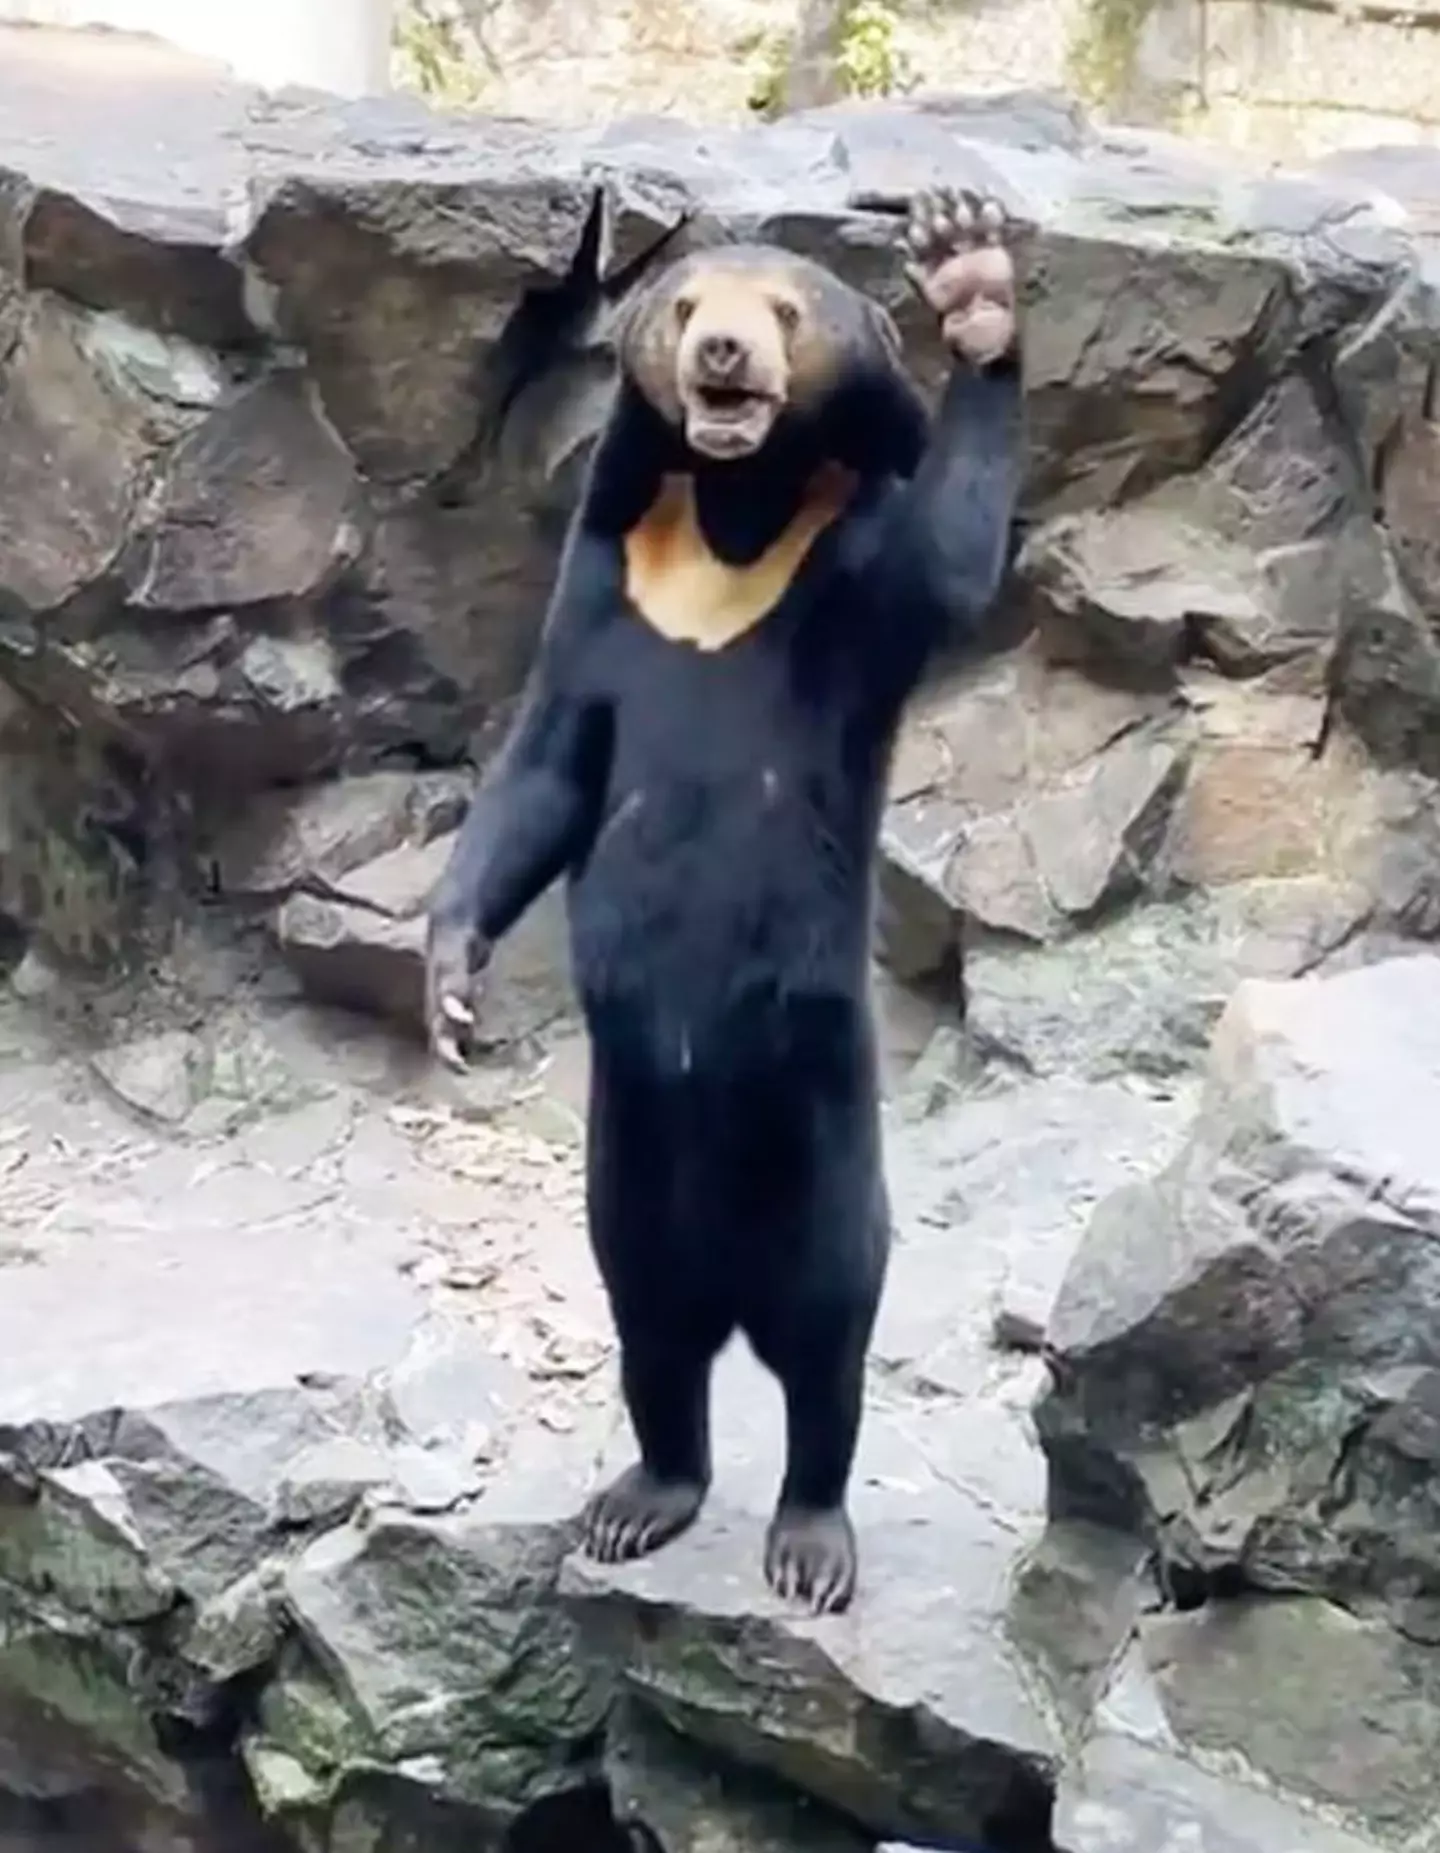 Hangzhou Zoo said people 'don't understand' the species.